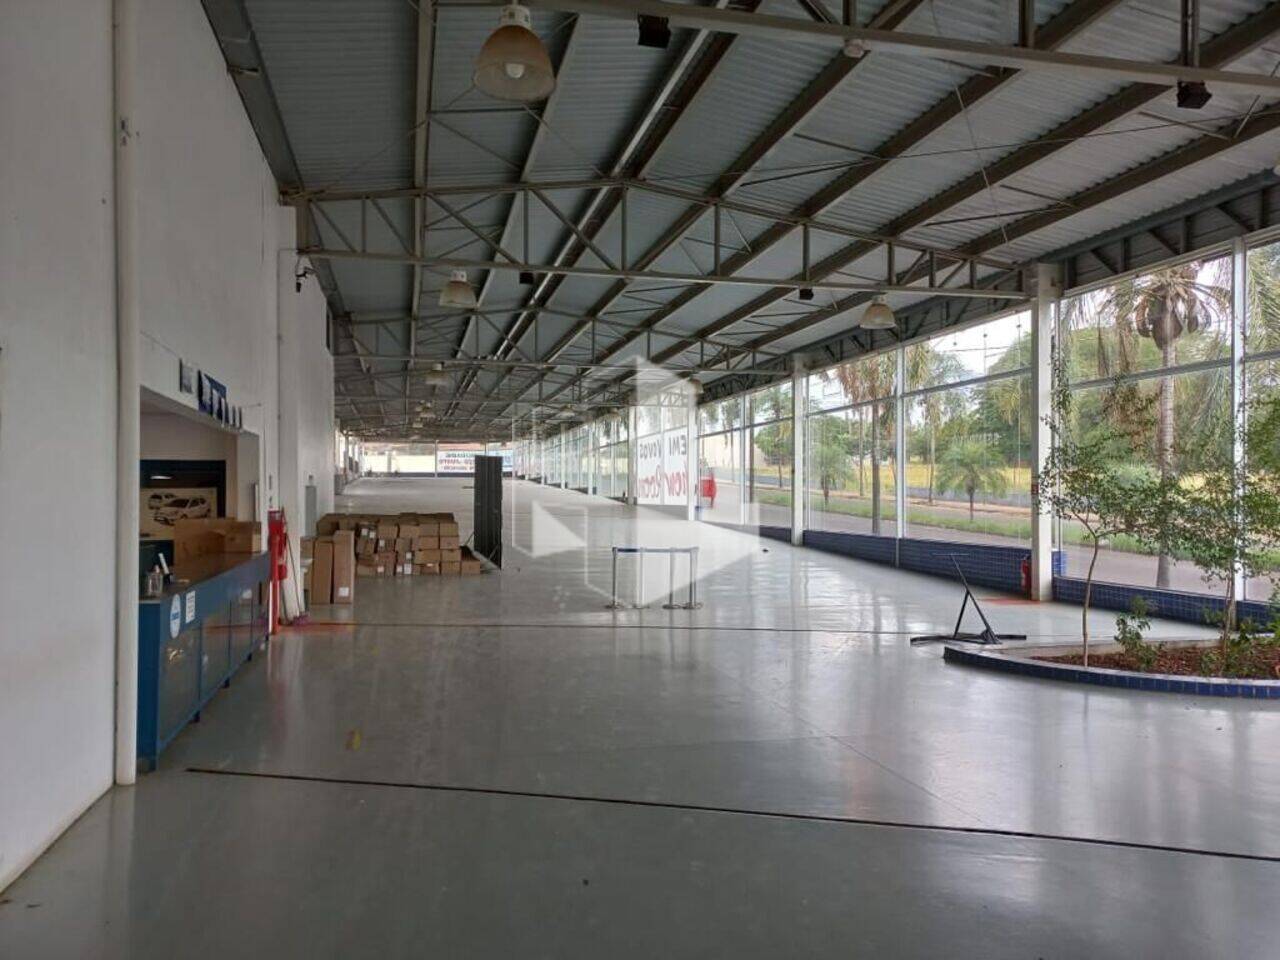 Barracão 1ª Zona Industrial, Jaú - SP